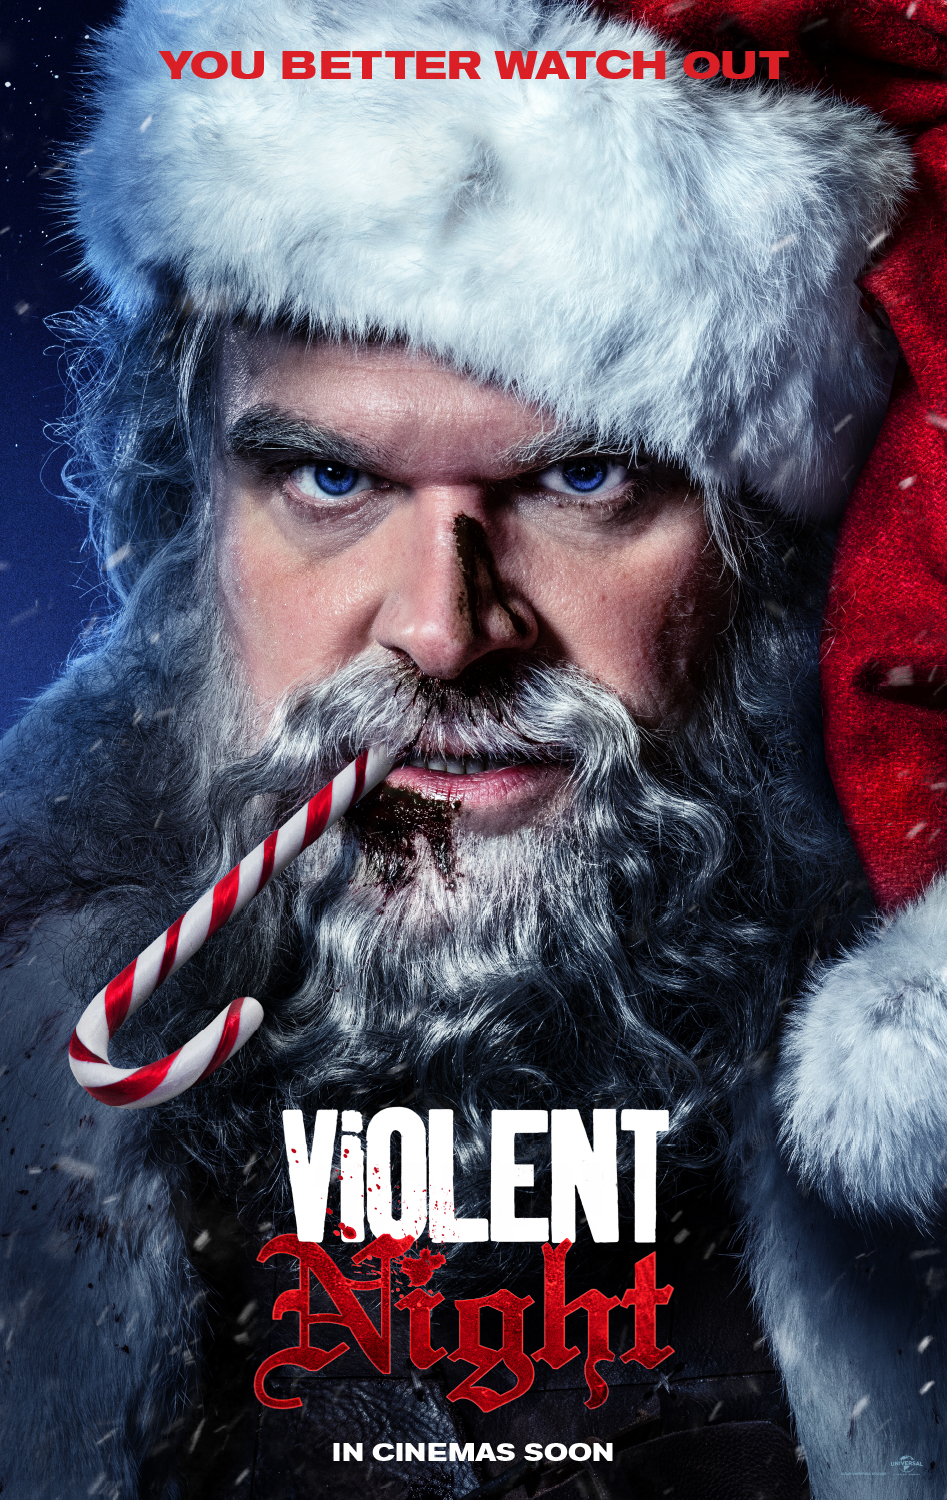 Violent Night Review: David Harbour is having a blast as Santa!